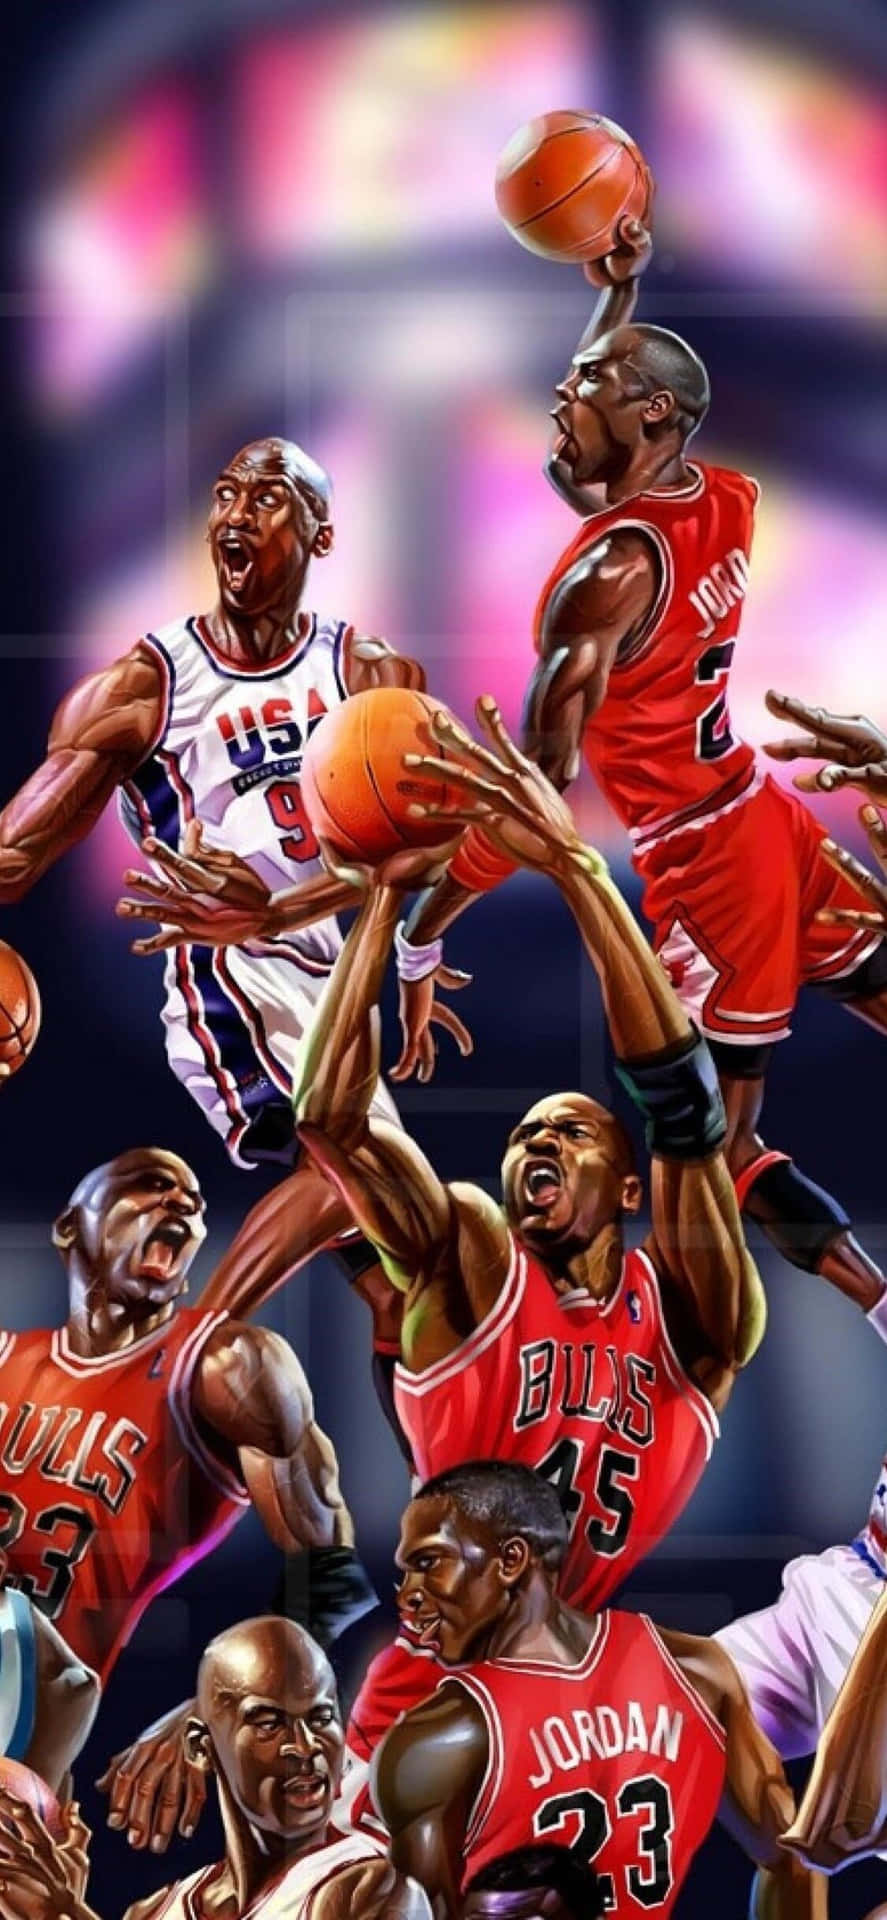 Be like Mike: Michael Jordan on an iPhone Wallpaper